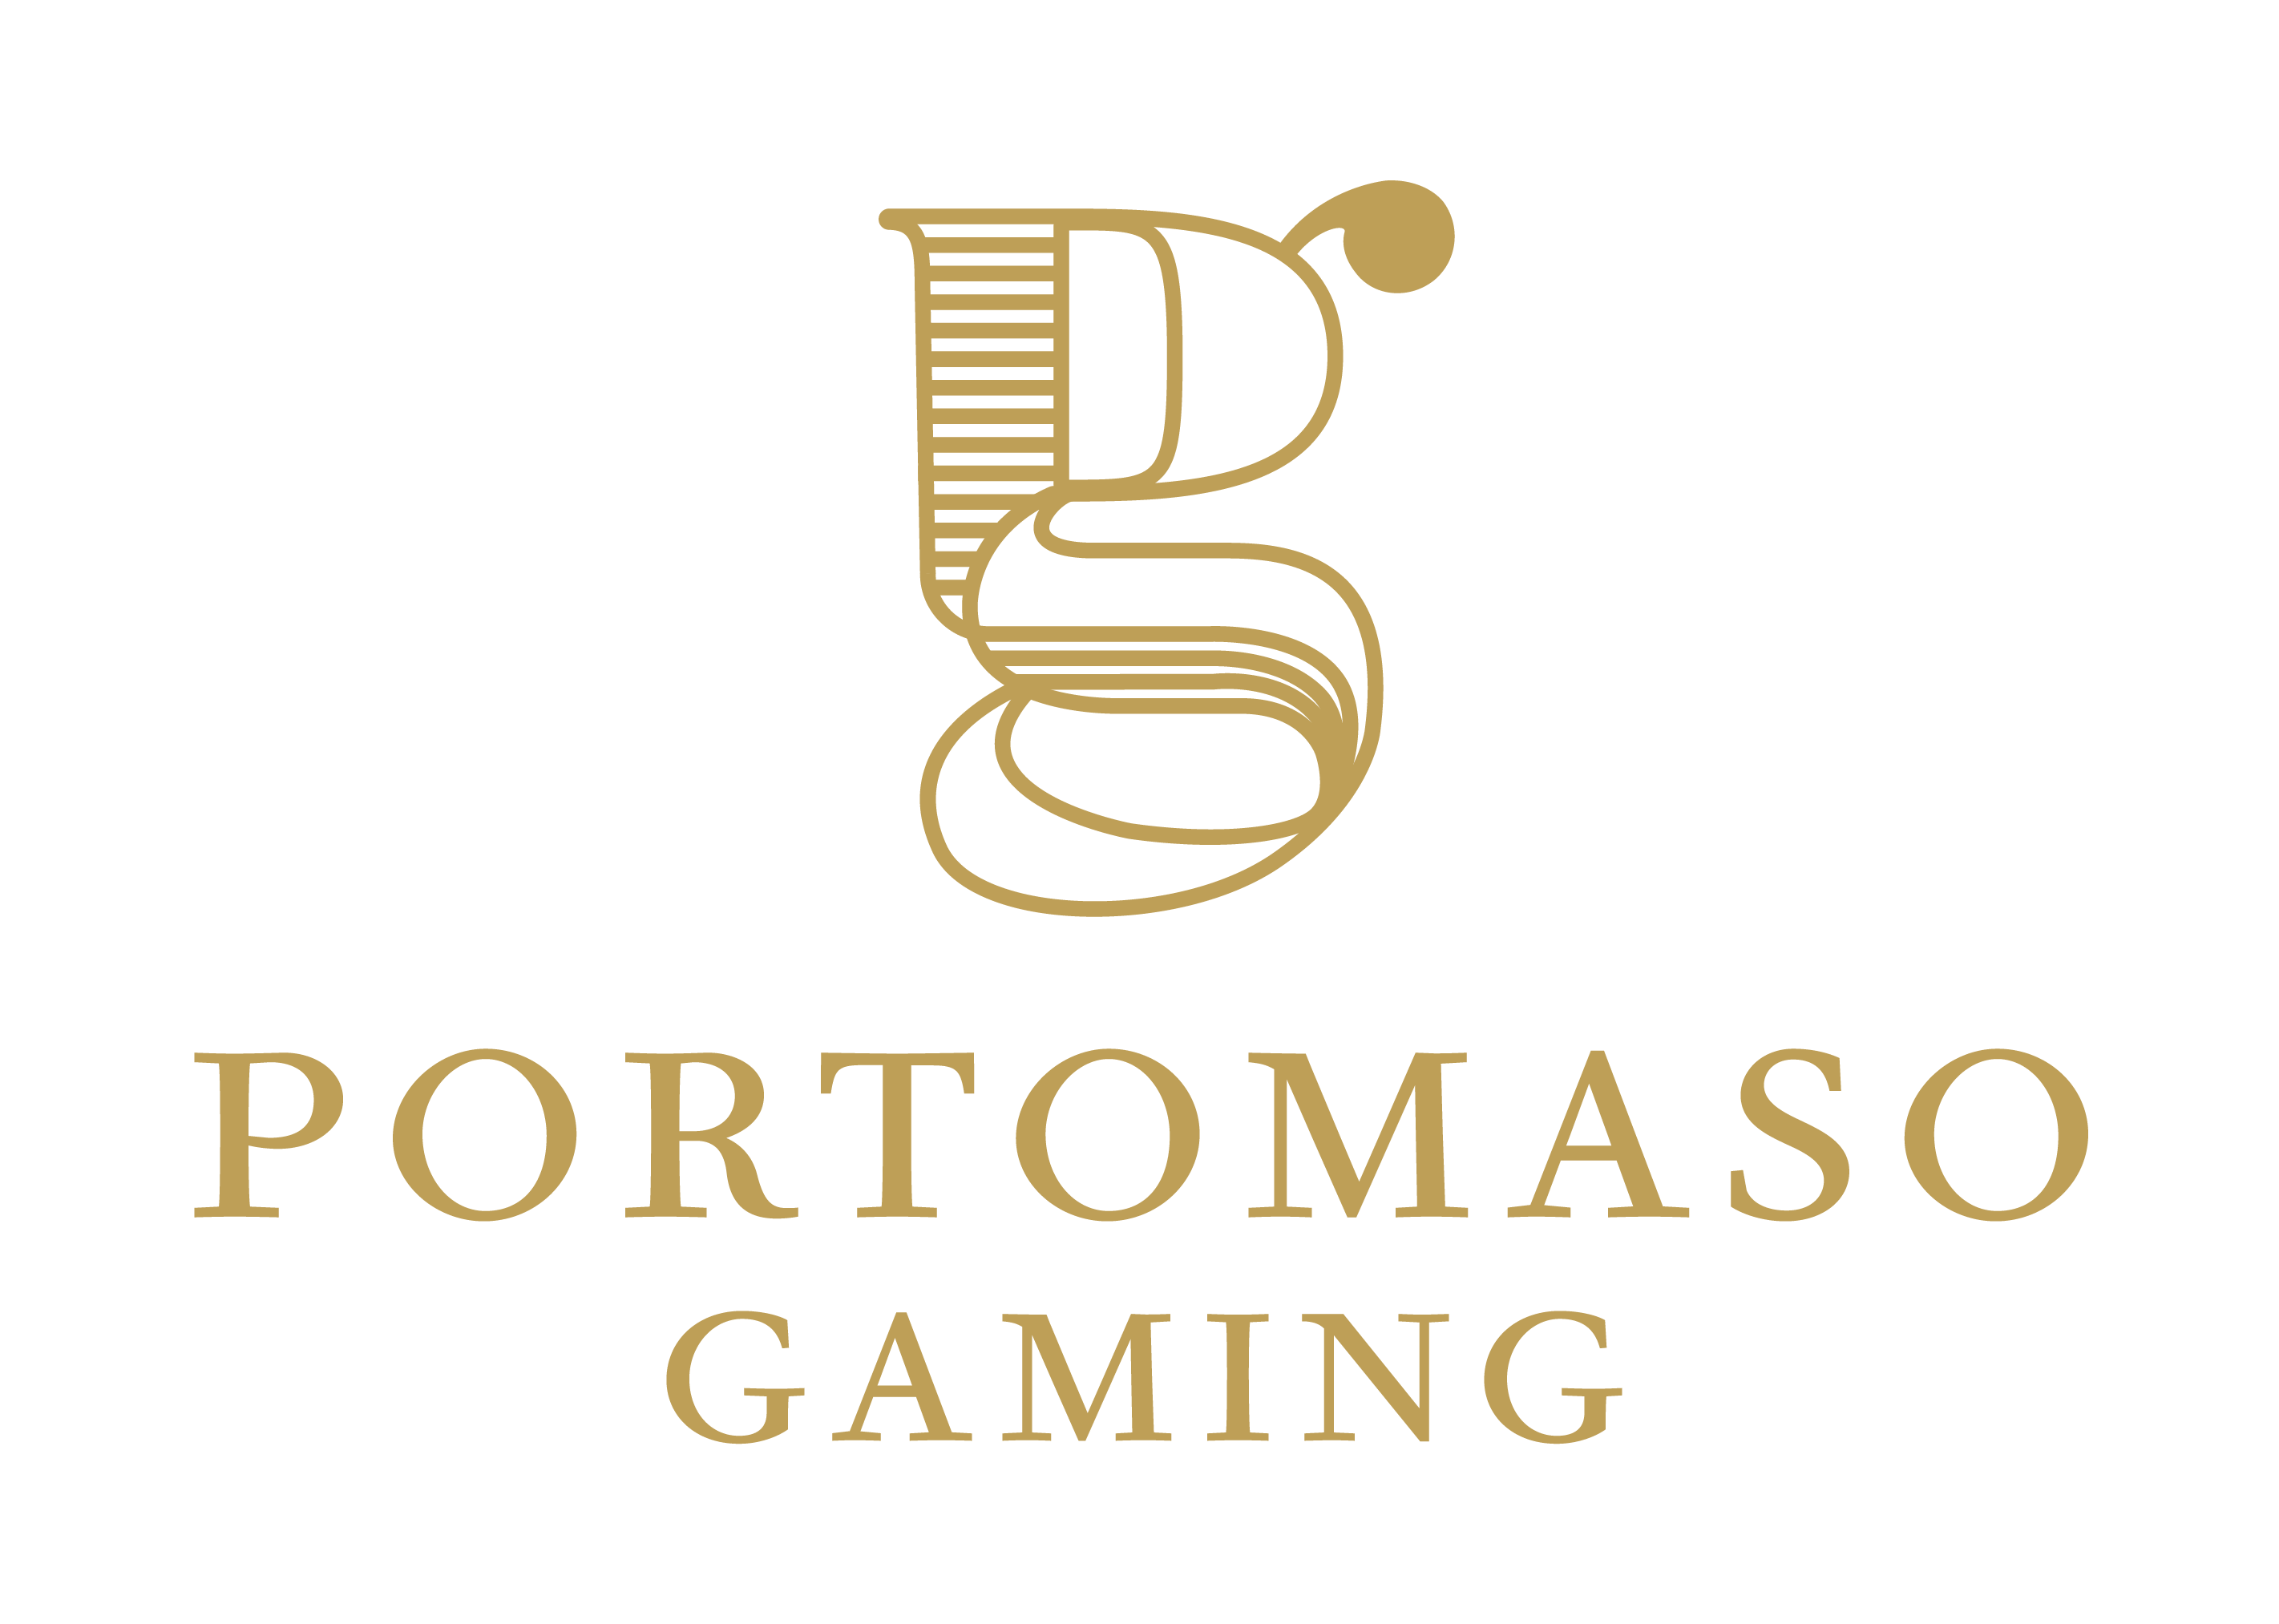 Portomaso Gaming trò chơi